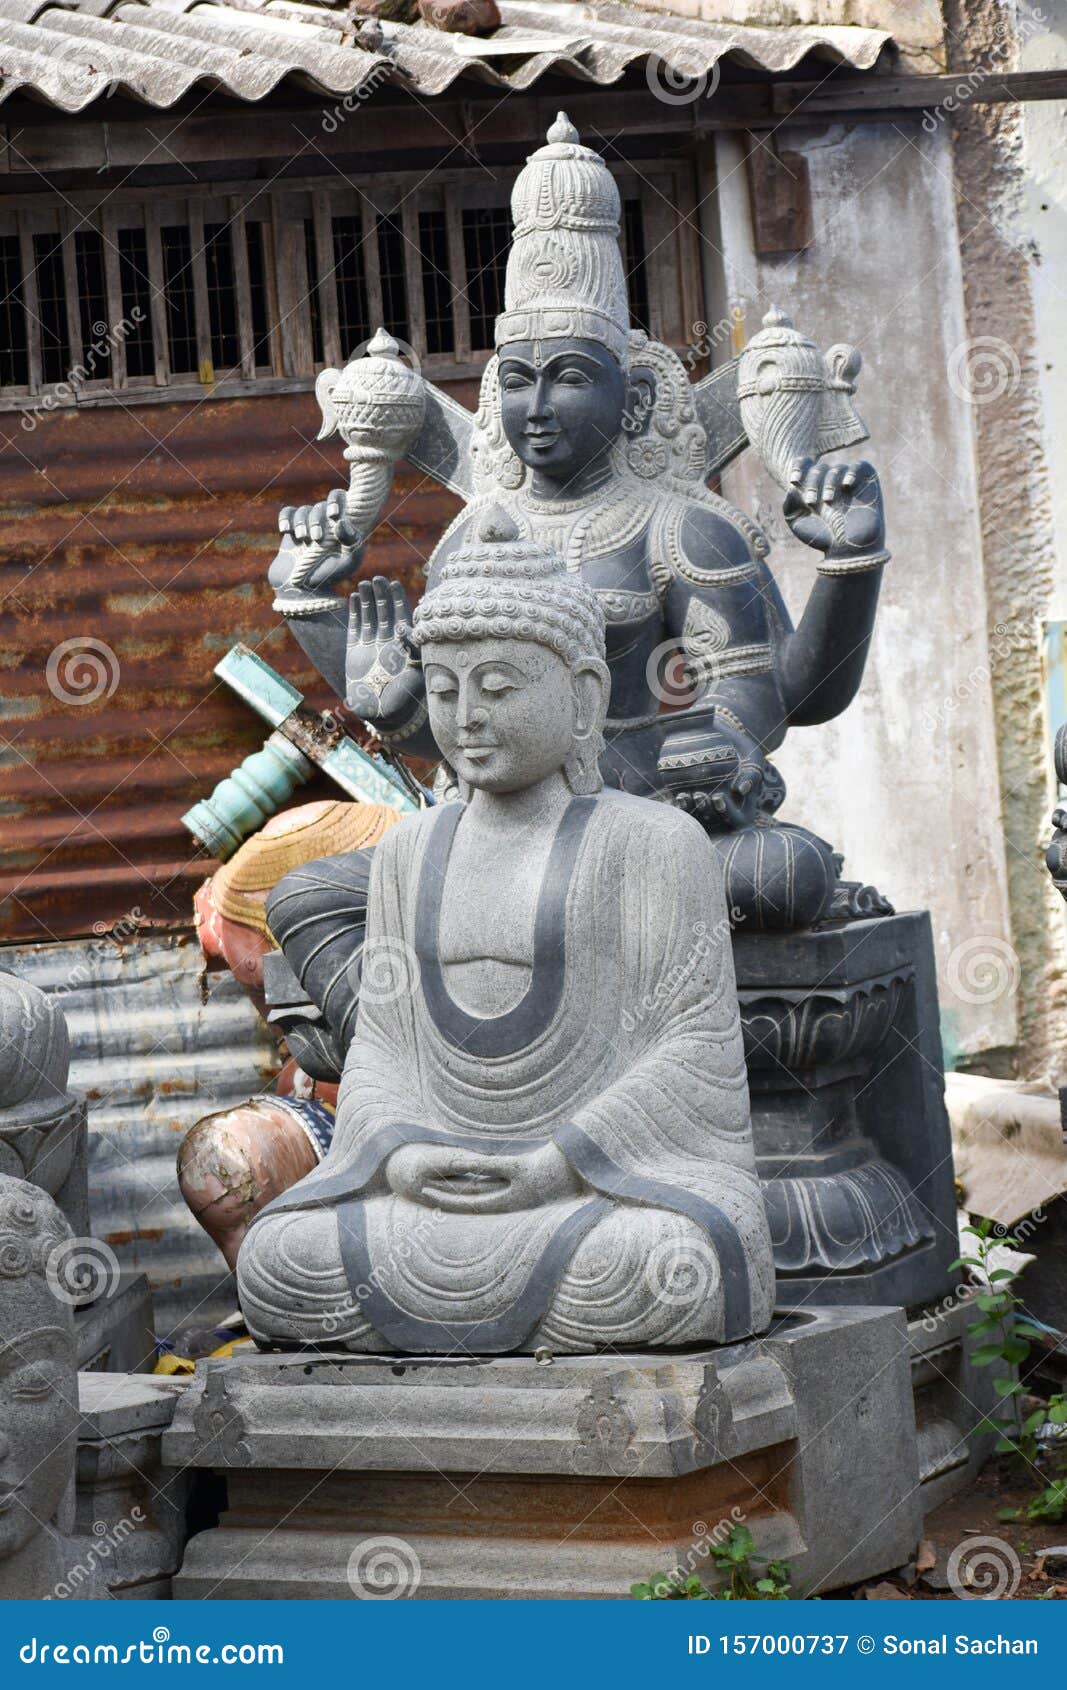 Beautiful Stone Carved Idols at a Street Shop Stock Image - Image of nadu,  gods: 157000737